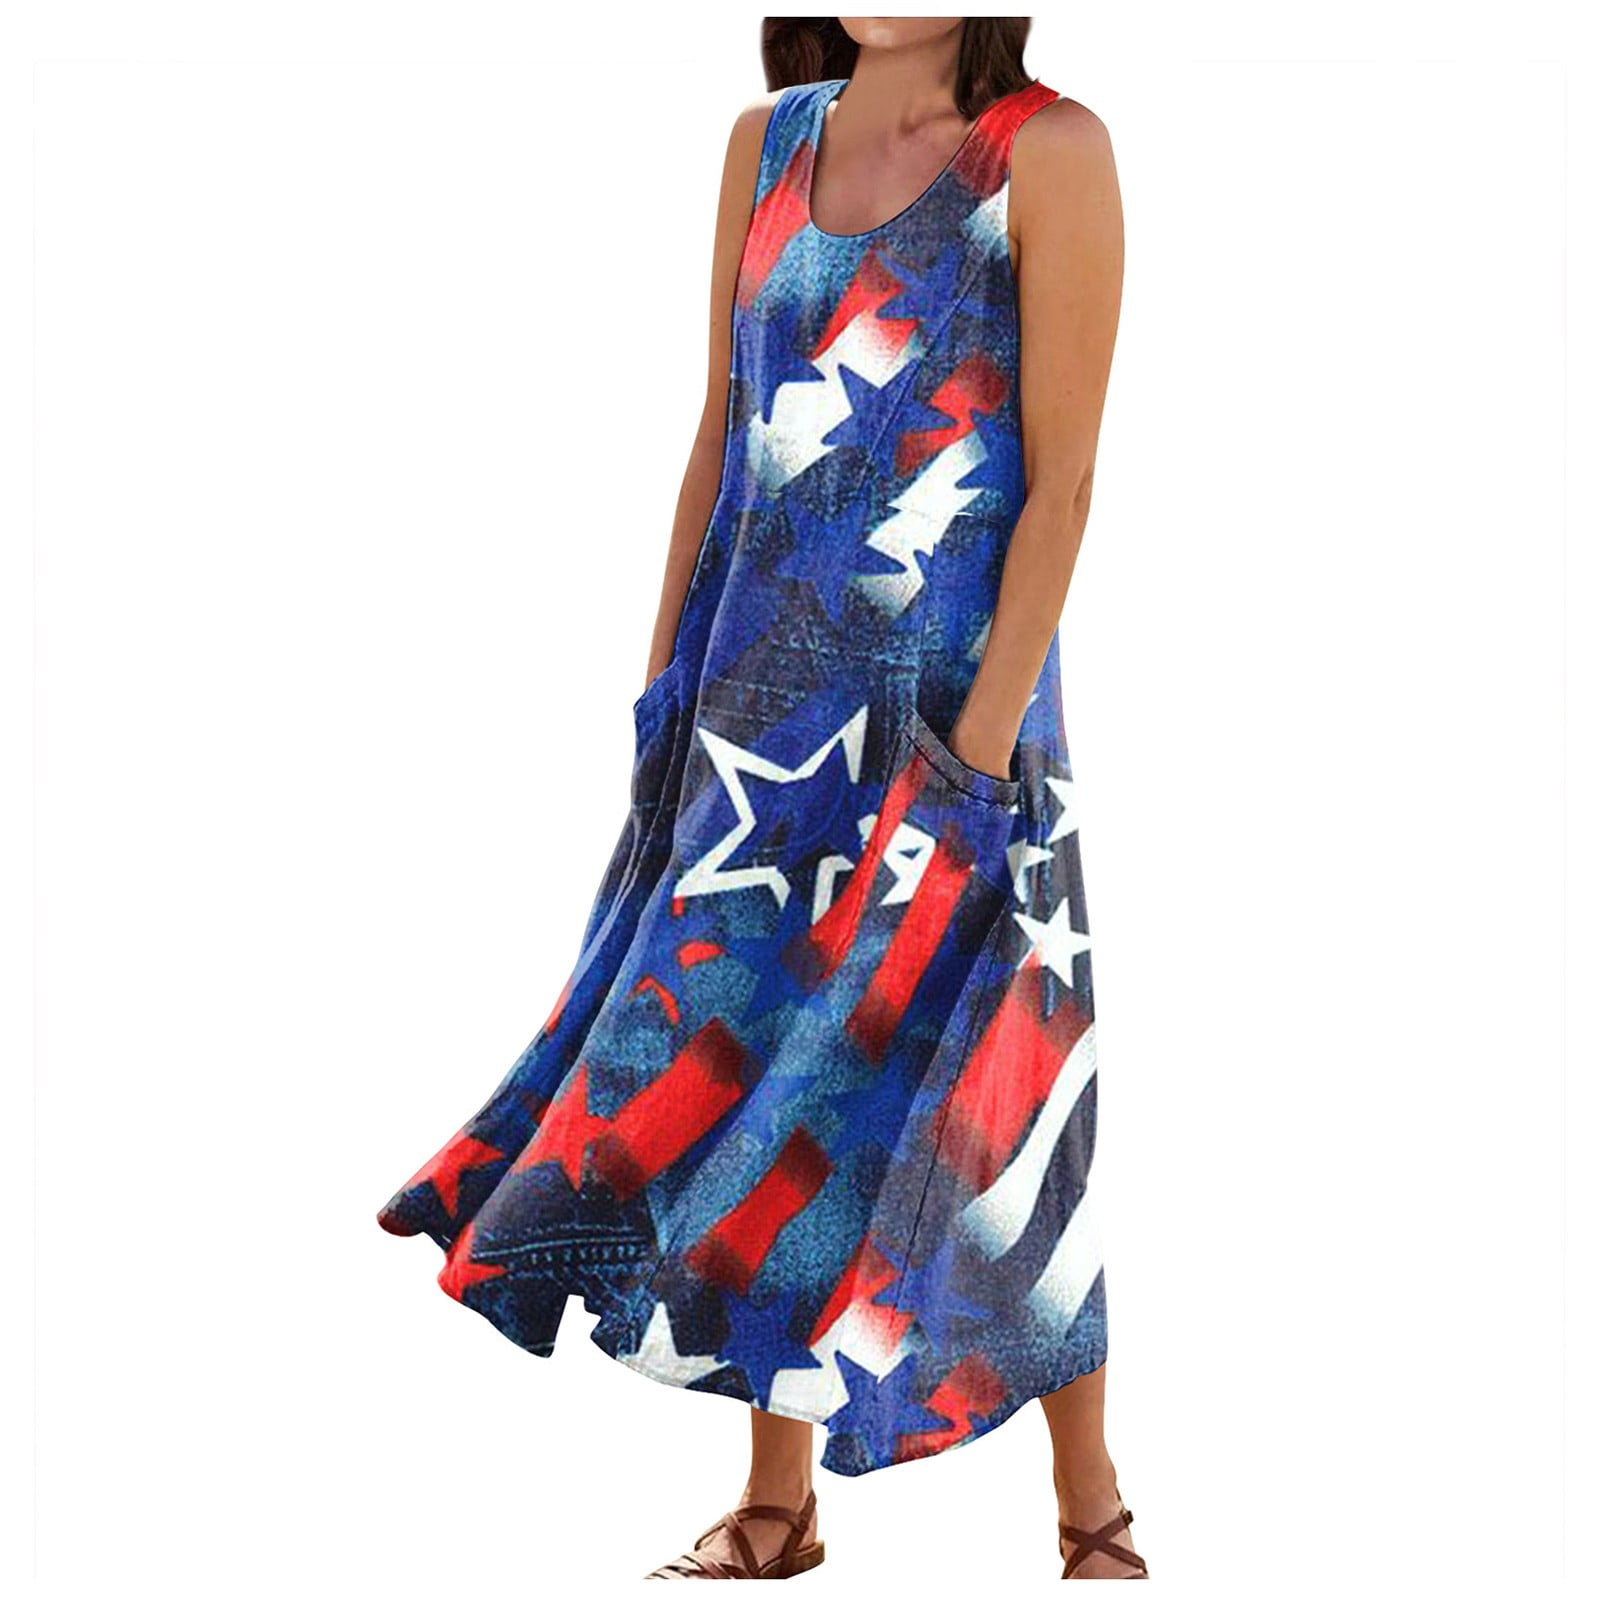 Sksloeg Sales Clearance Summer Dresses for Women, American Flag Printed ...